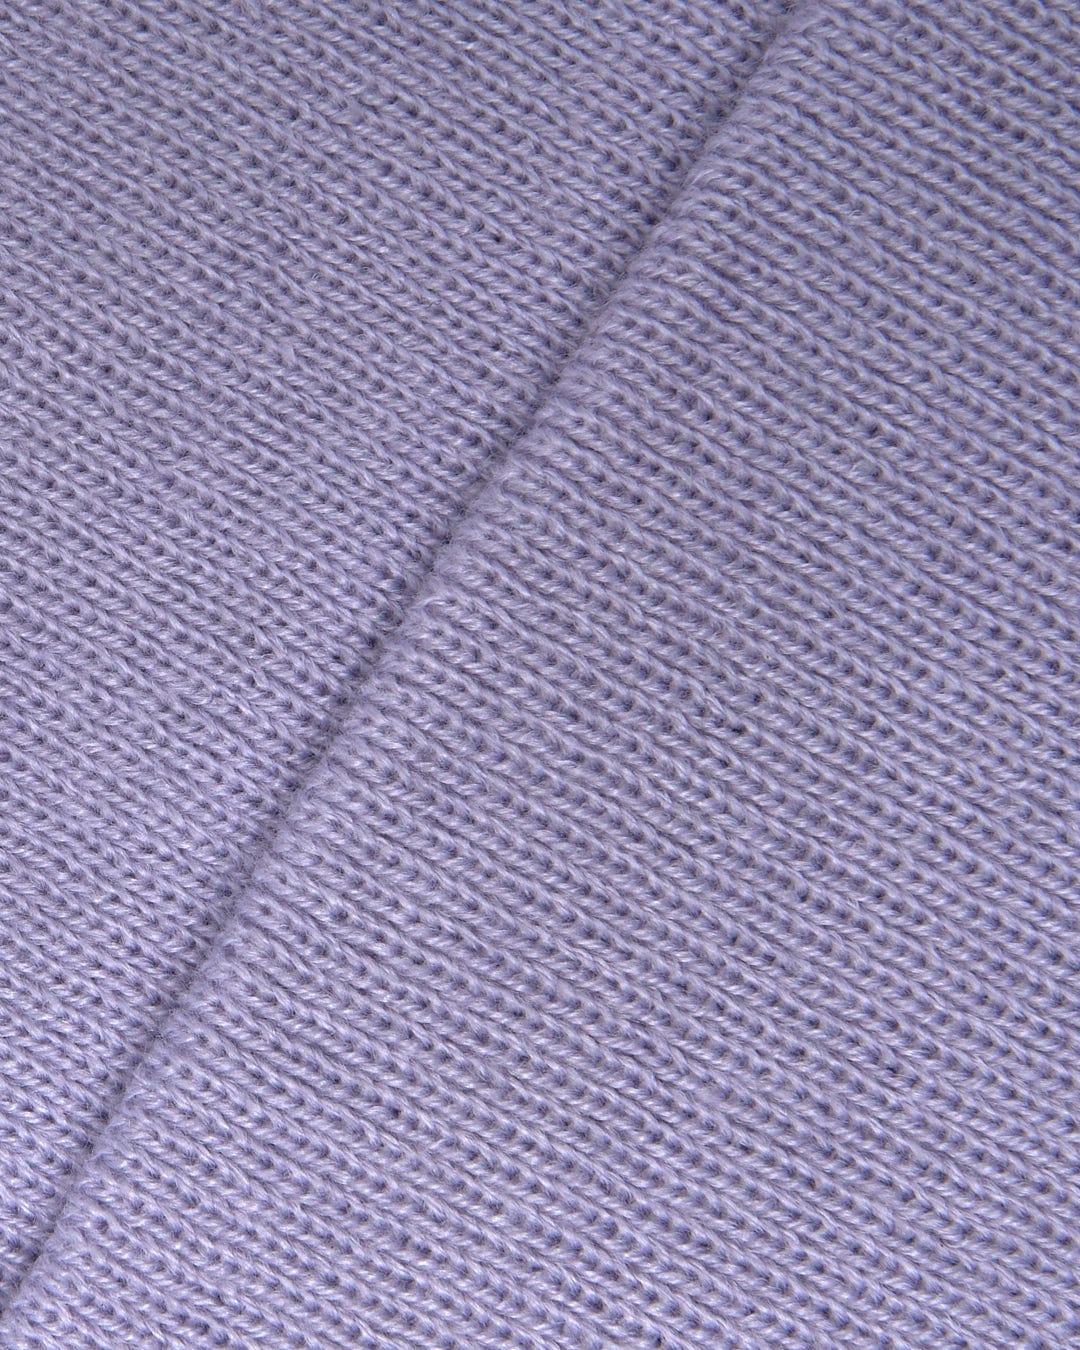 A close up of a Saltrock Ok - Tight Knit Beanie - Light Purple.